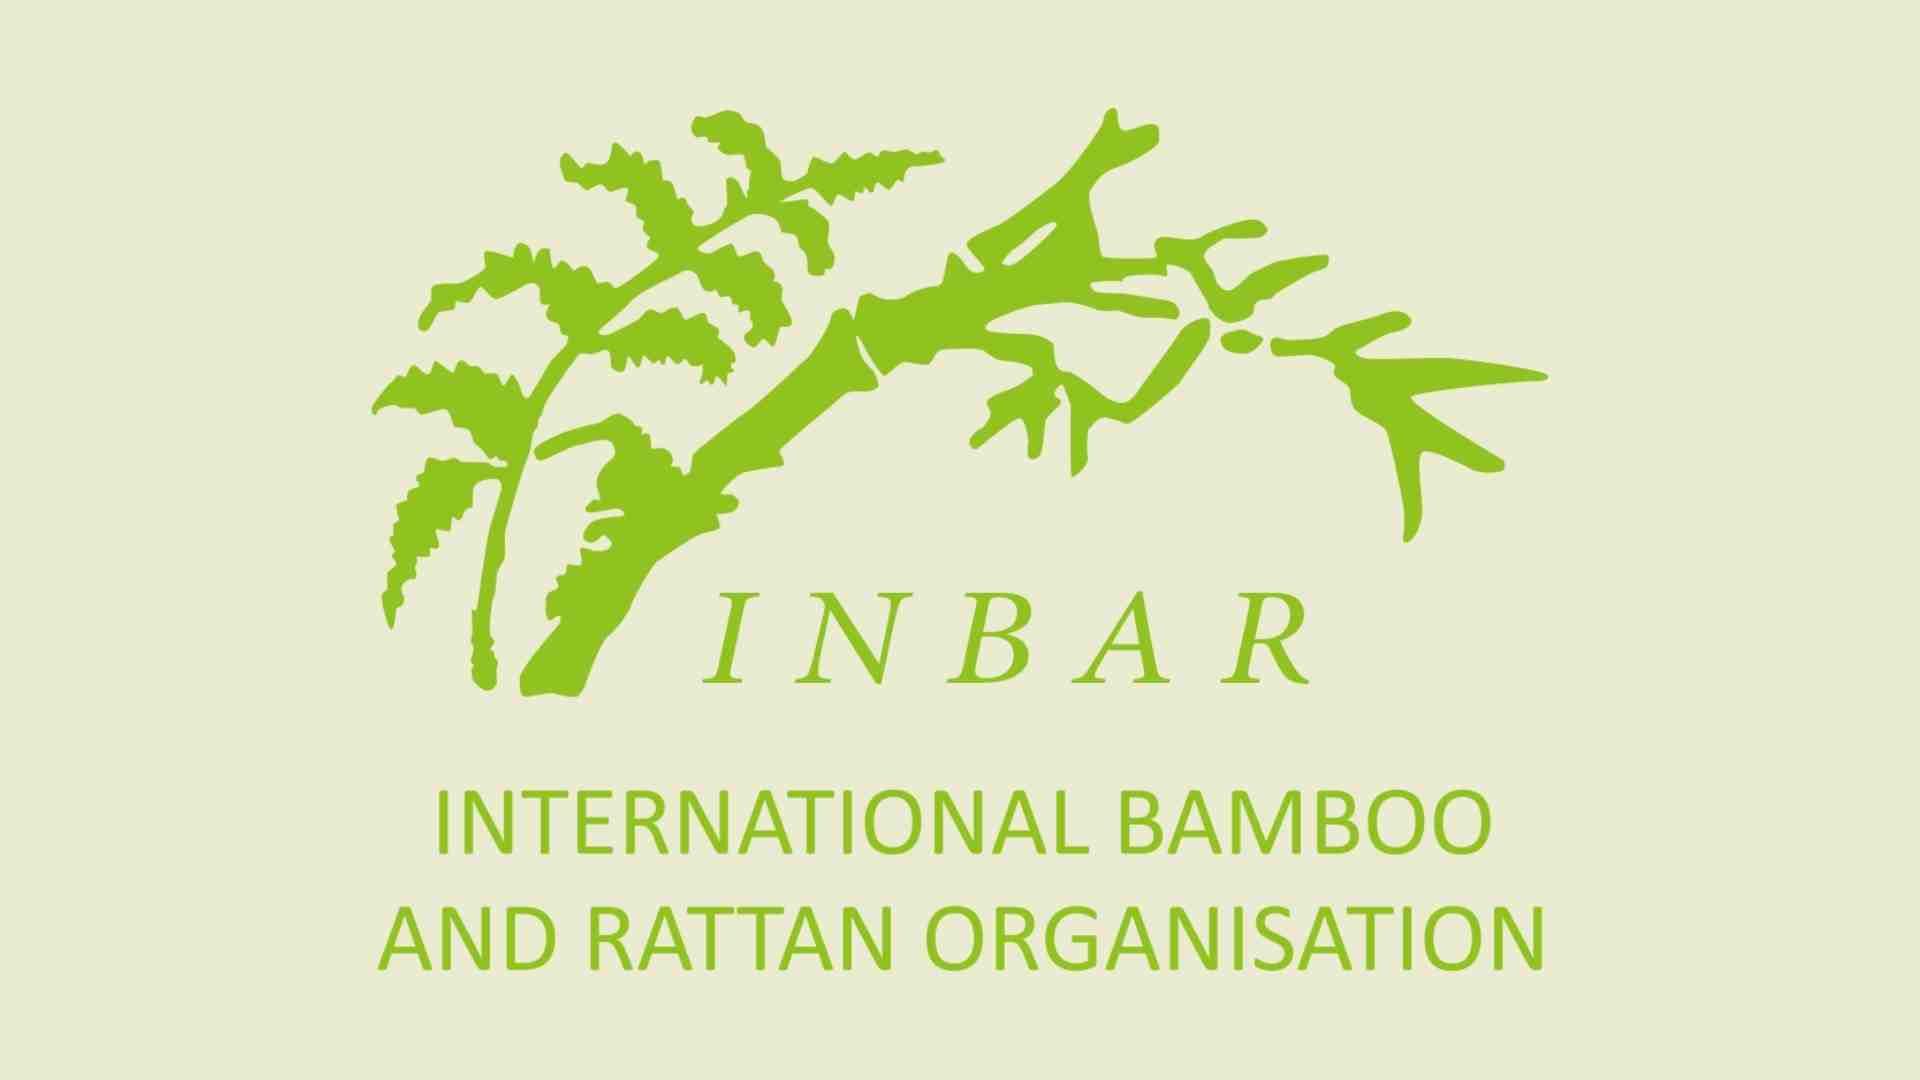 International Bamboo and Rattan Organization